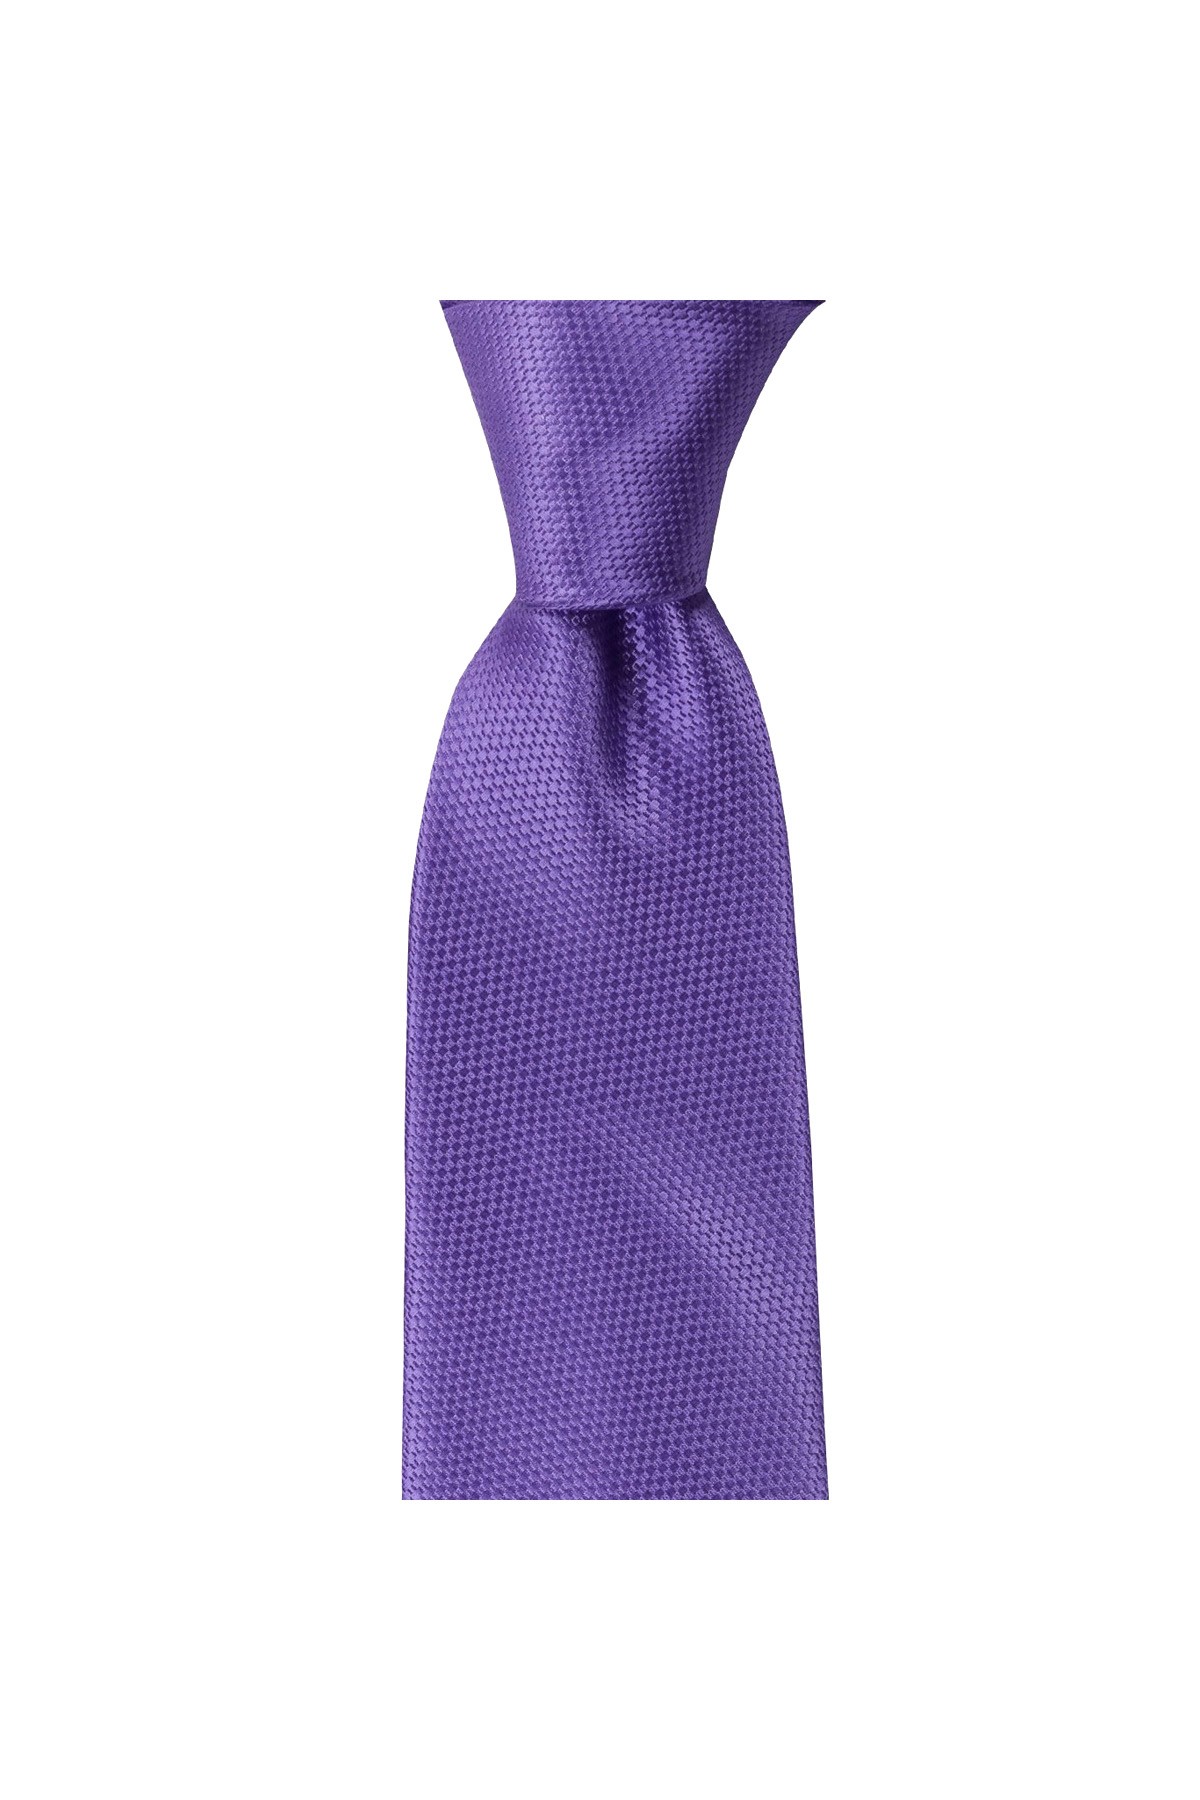 Klasik 8 cm genişliğinde mendilli kravat - Mor